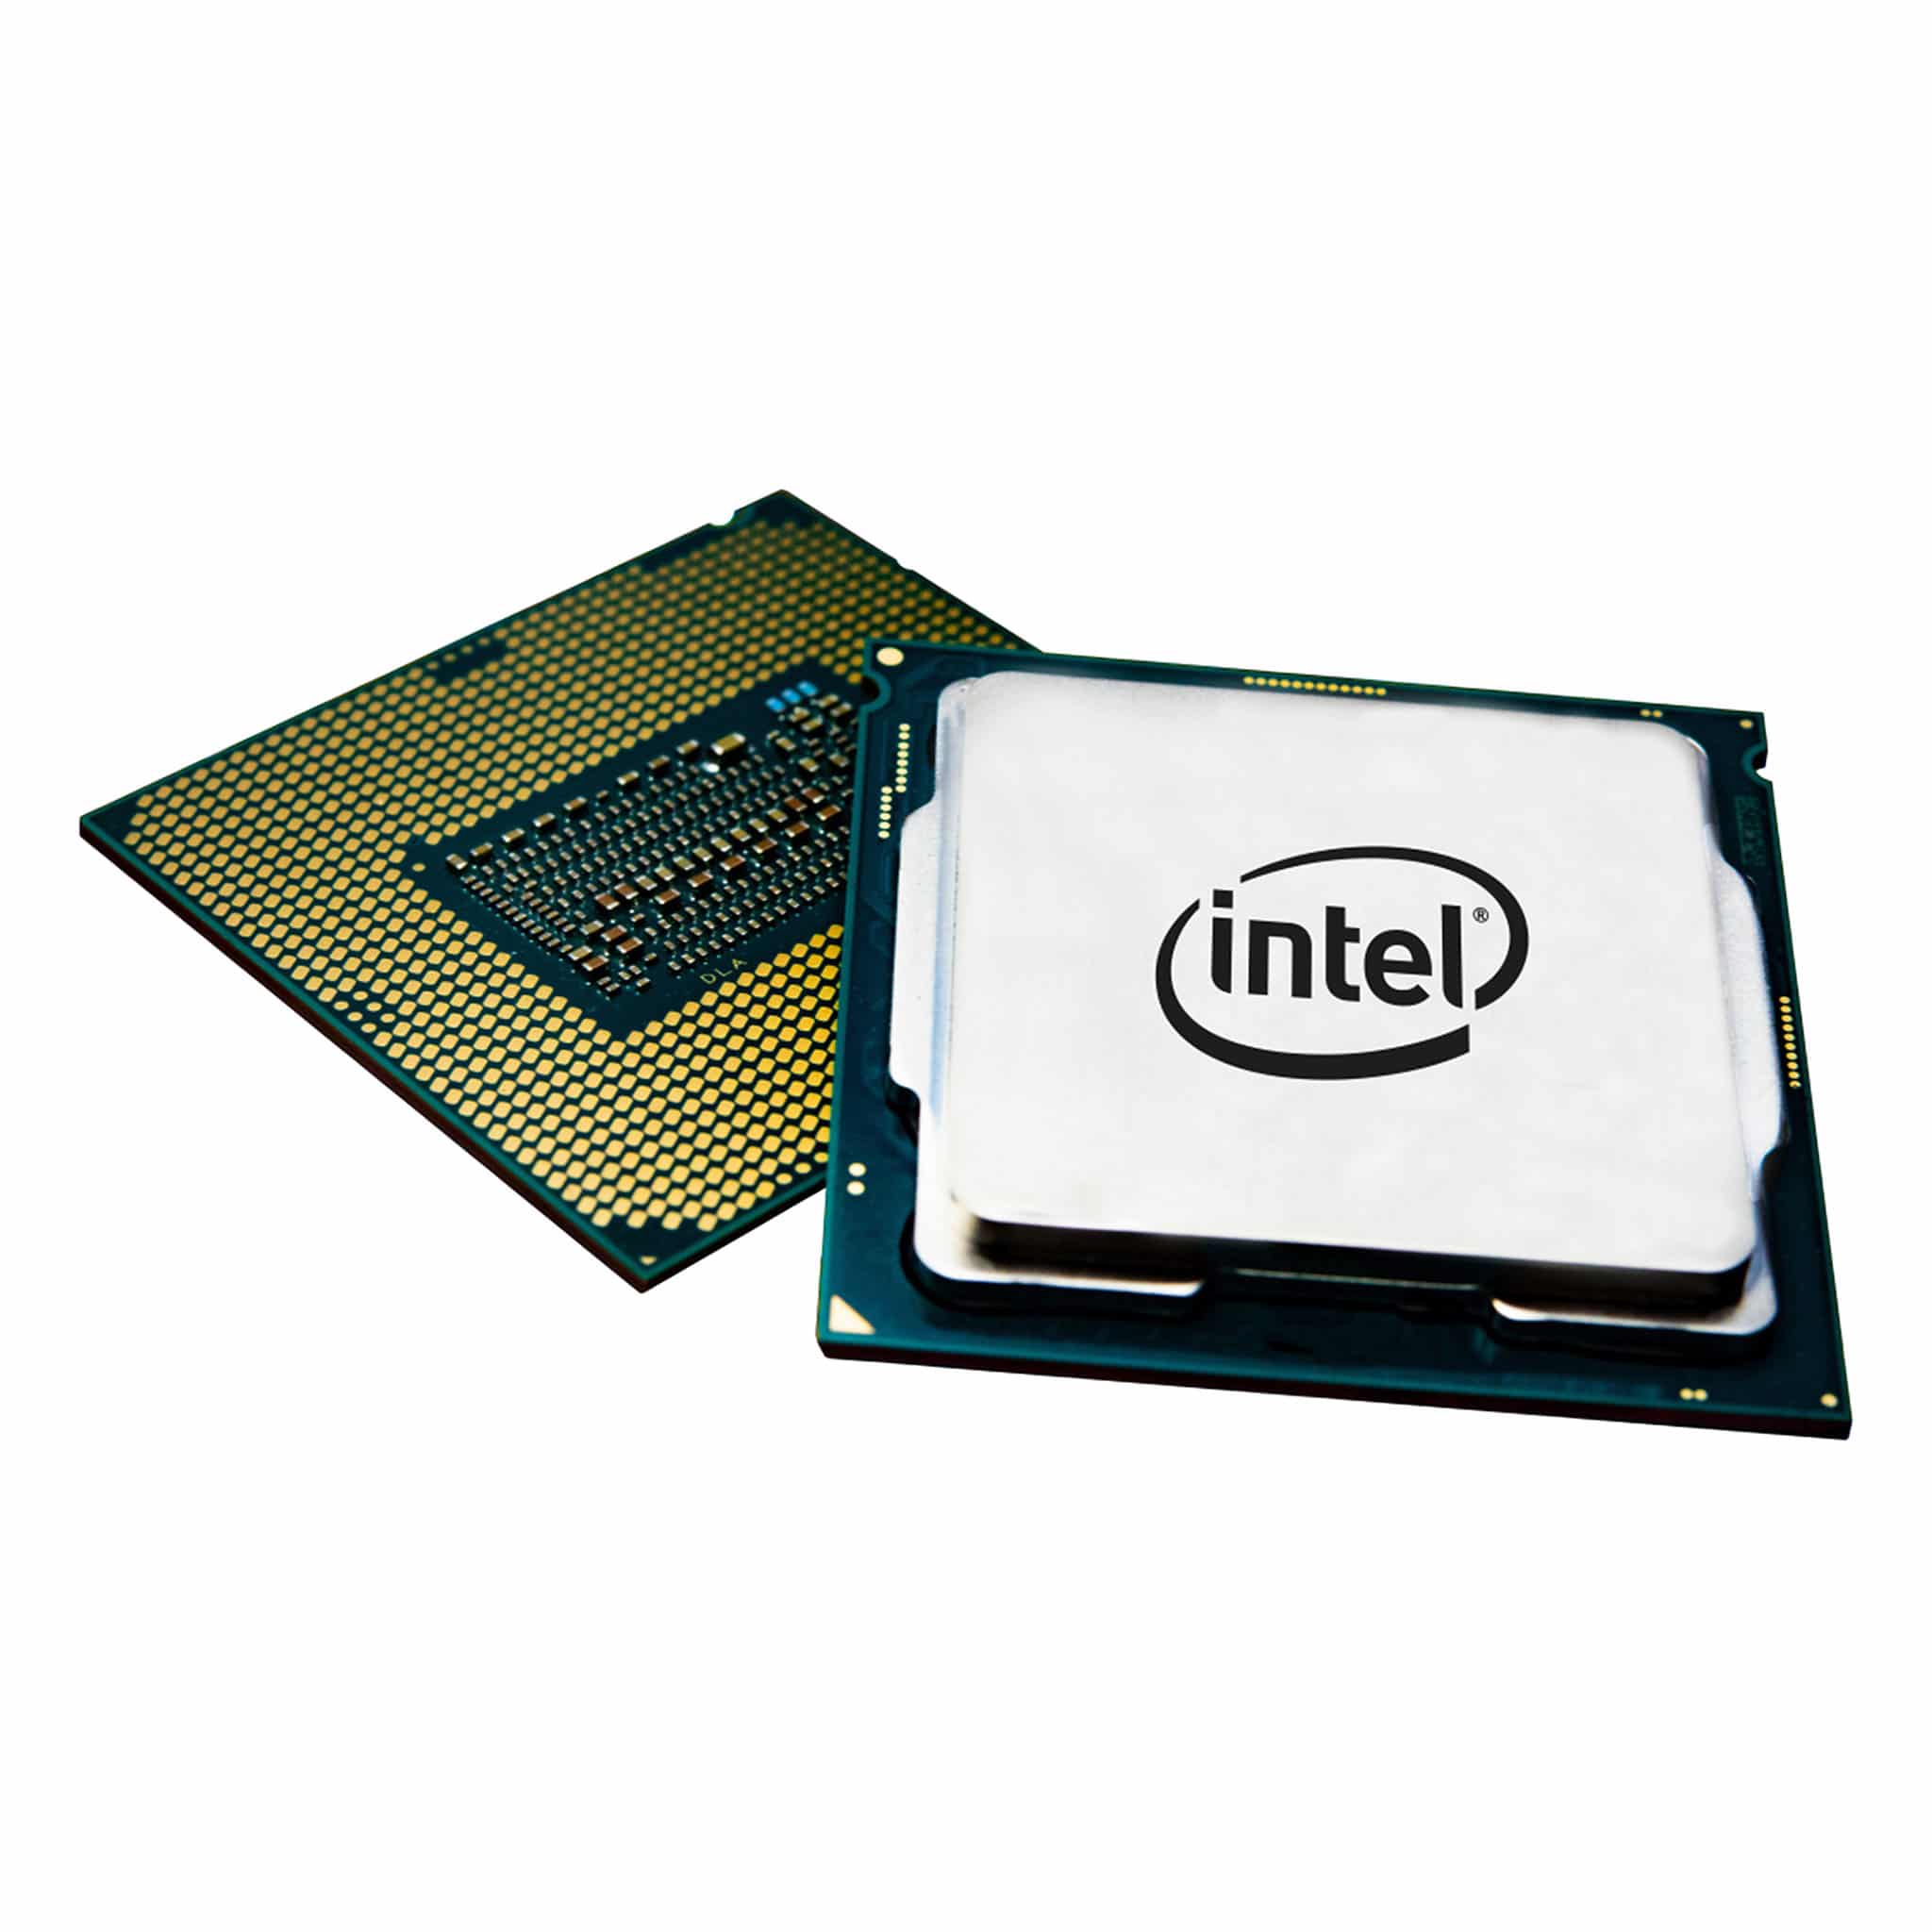 Intel Core I9-9900K Desktop Processor 8 Cores Up to 5.0 GHz Turbo Unlocked  LGA1151 300 Series 95W